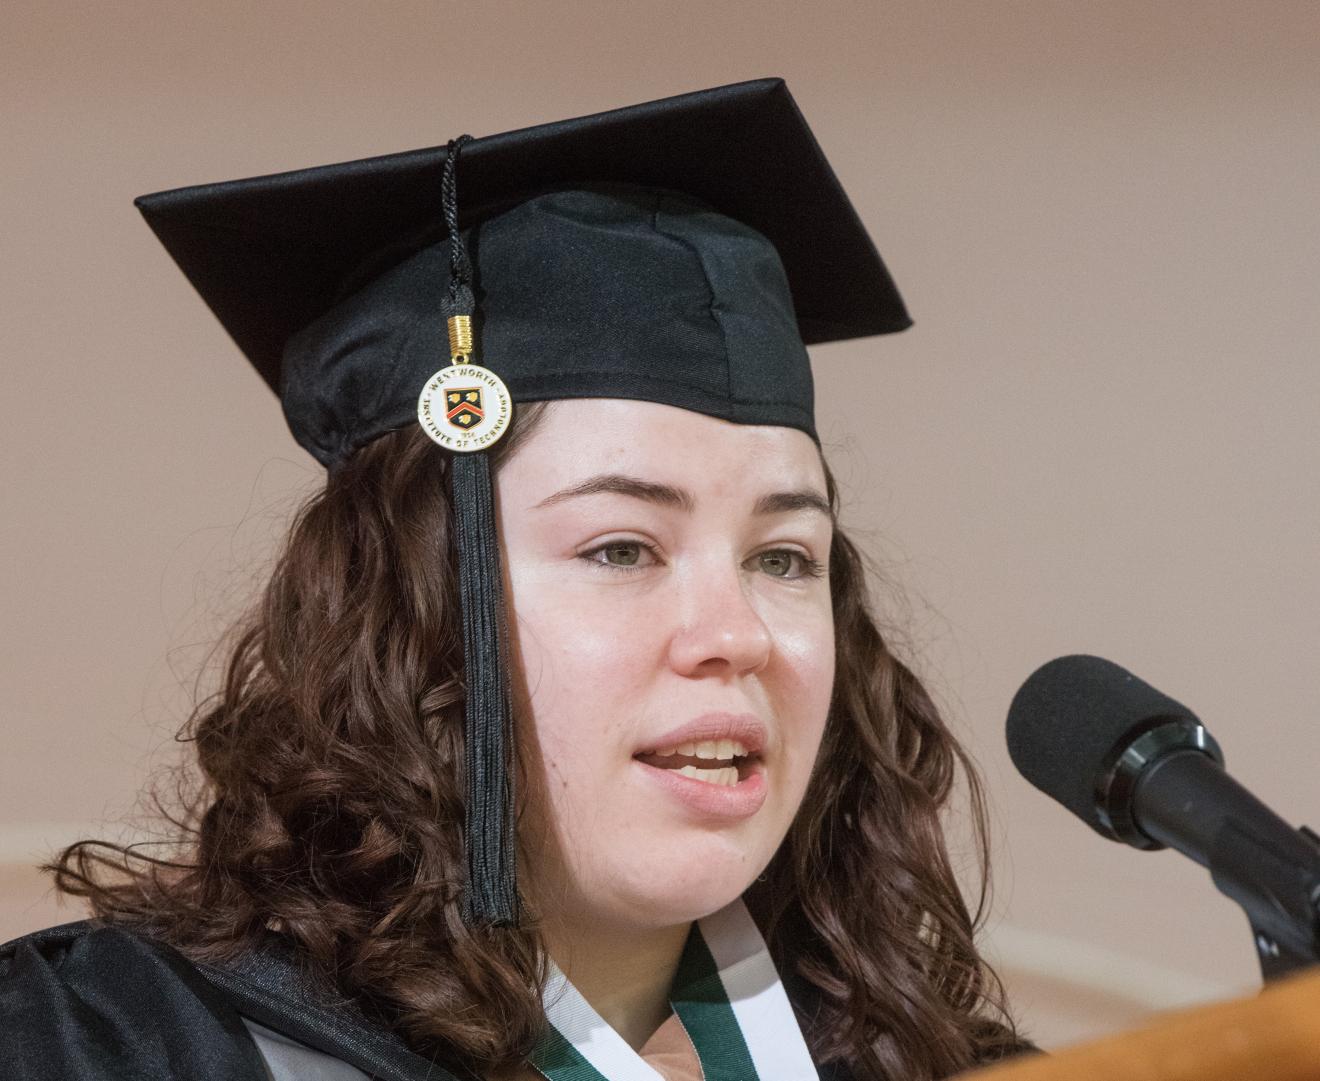 woman speaking while wearing graduation cap